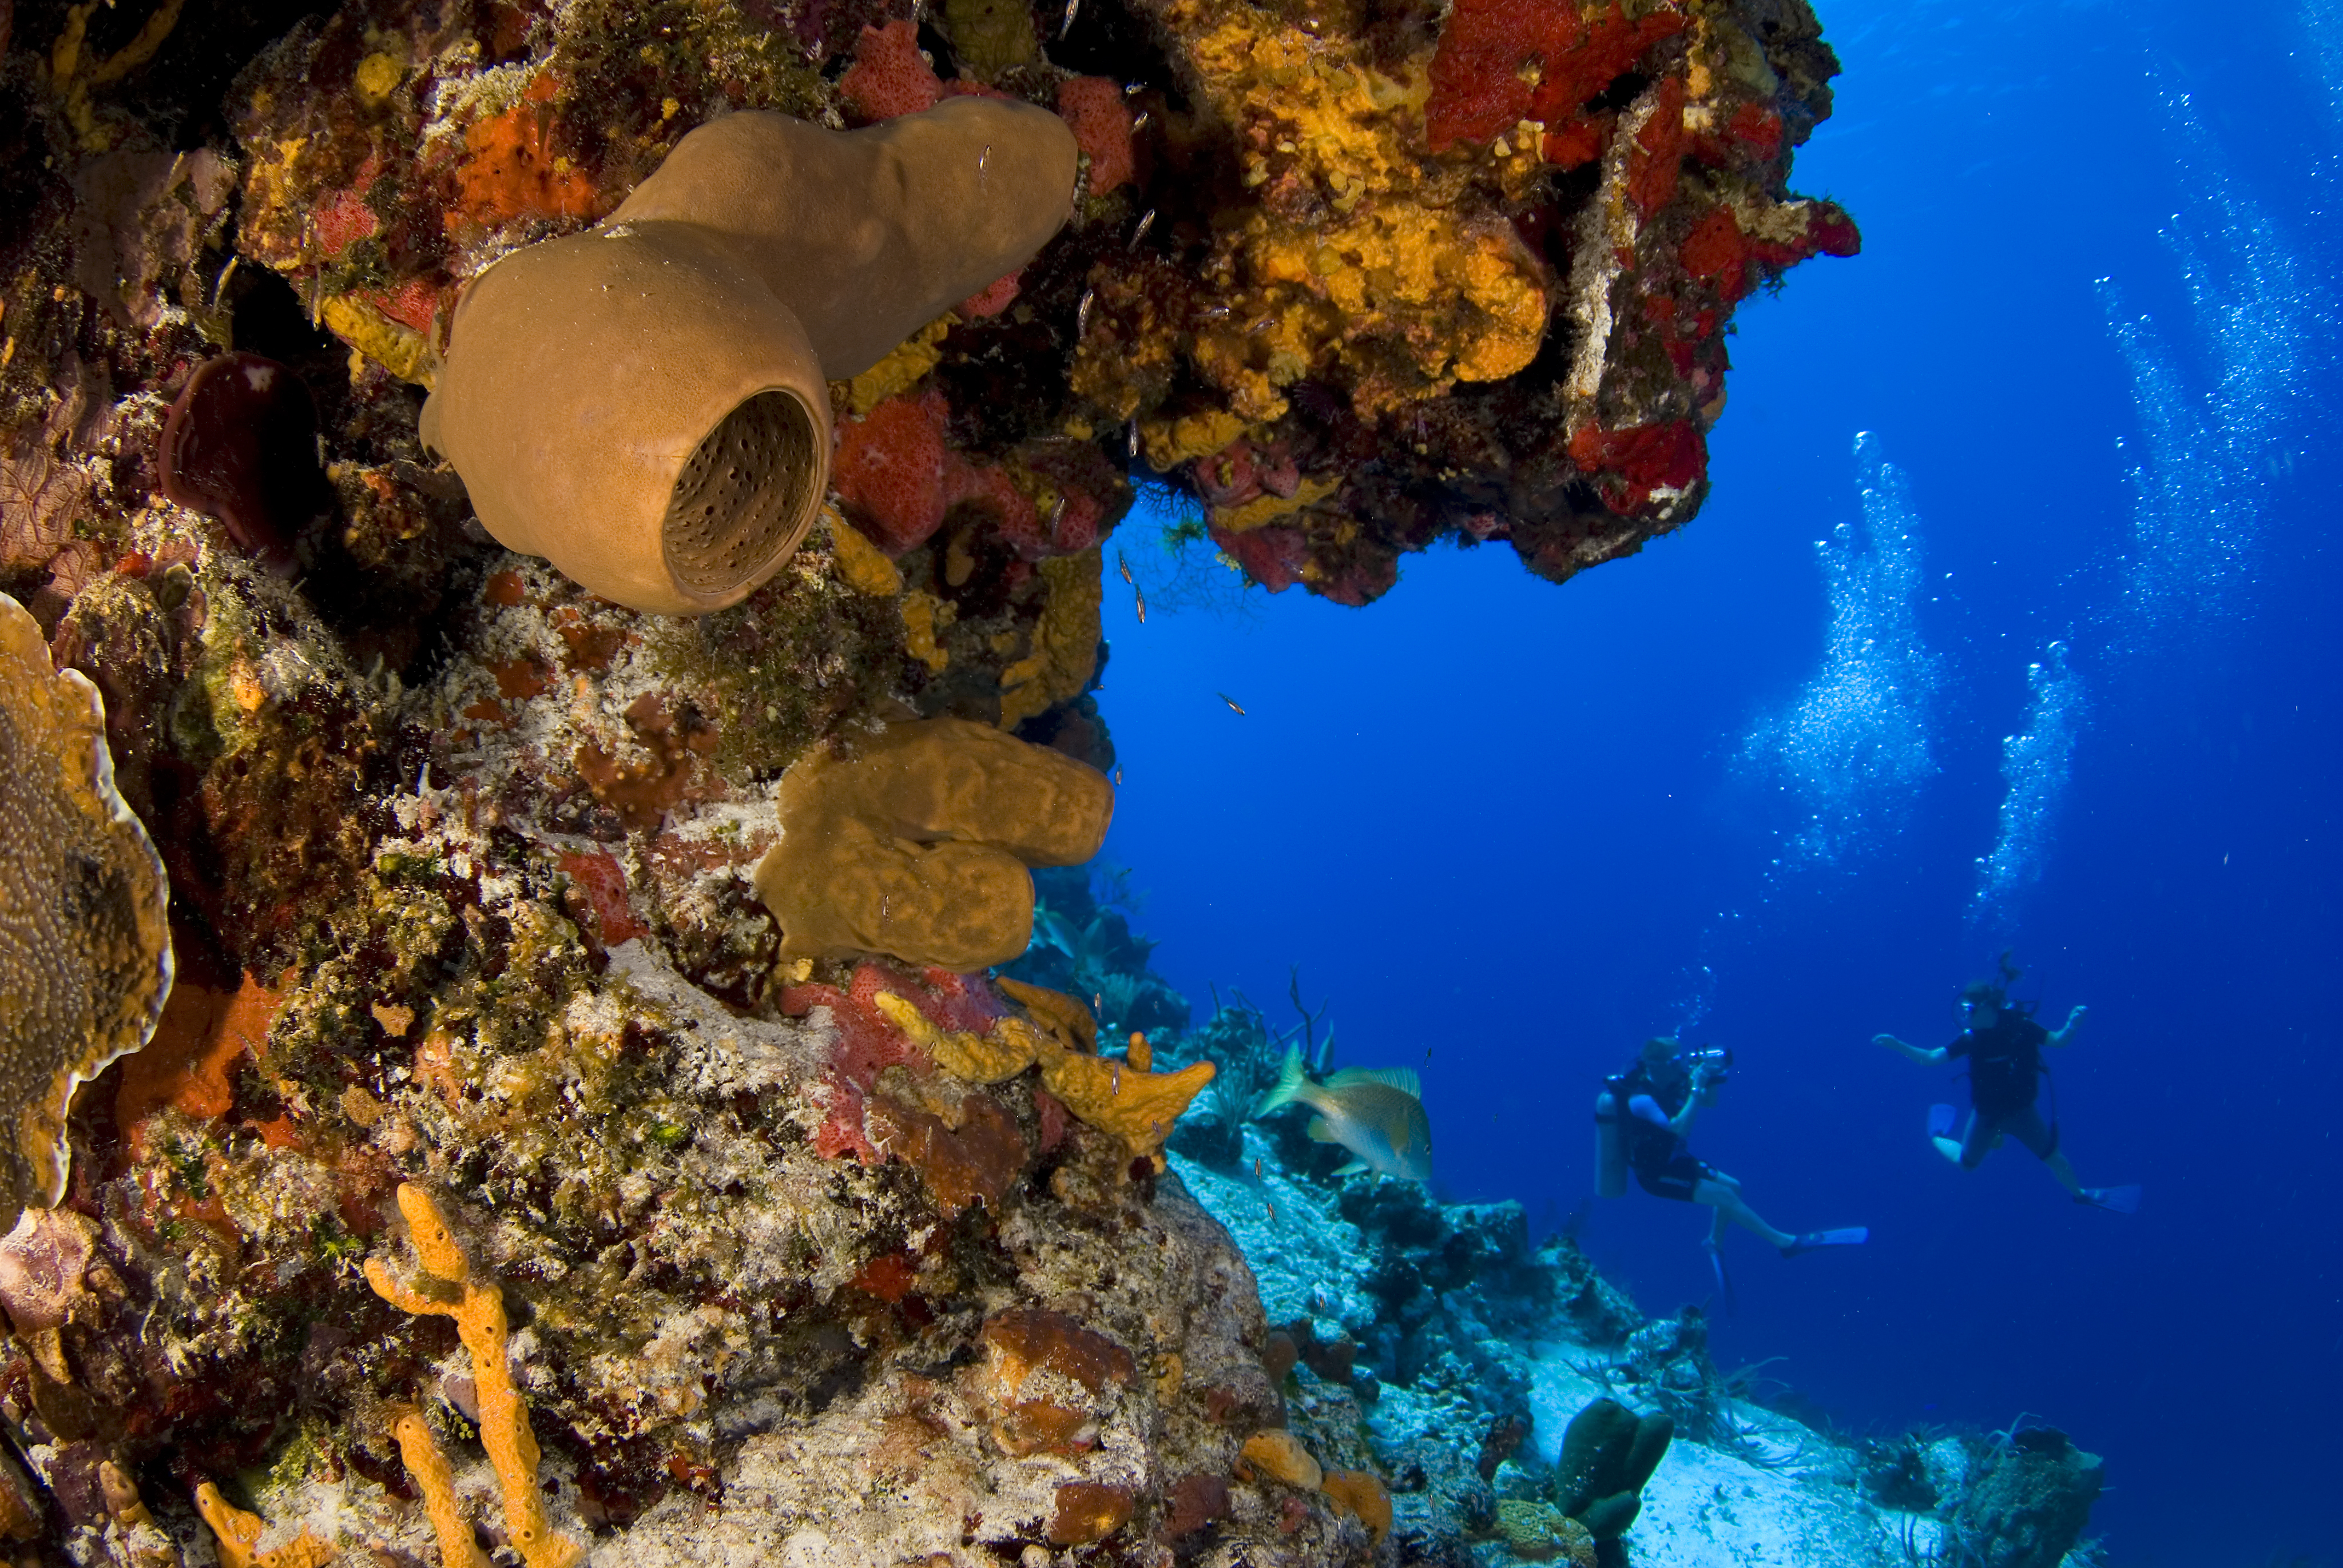 Scuba divers by sea sponge colony on reef, Cozumel Island Riviera Maya, Mexico, Caribbean sea